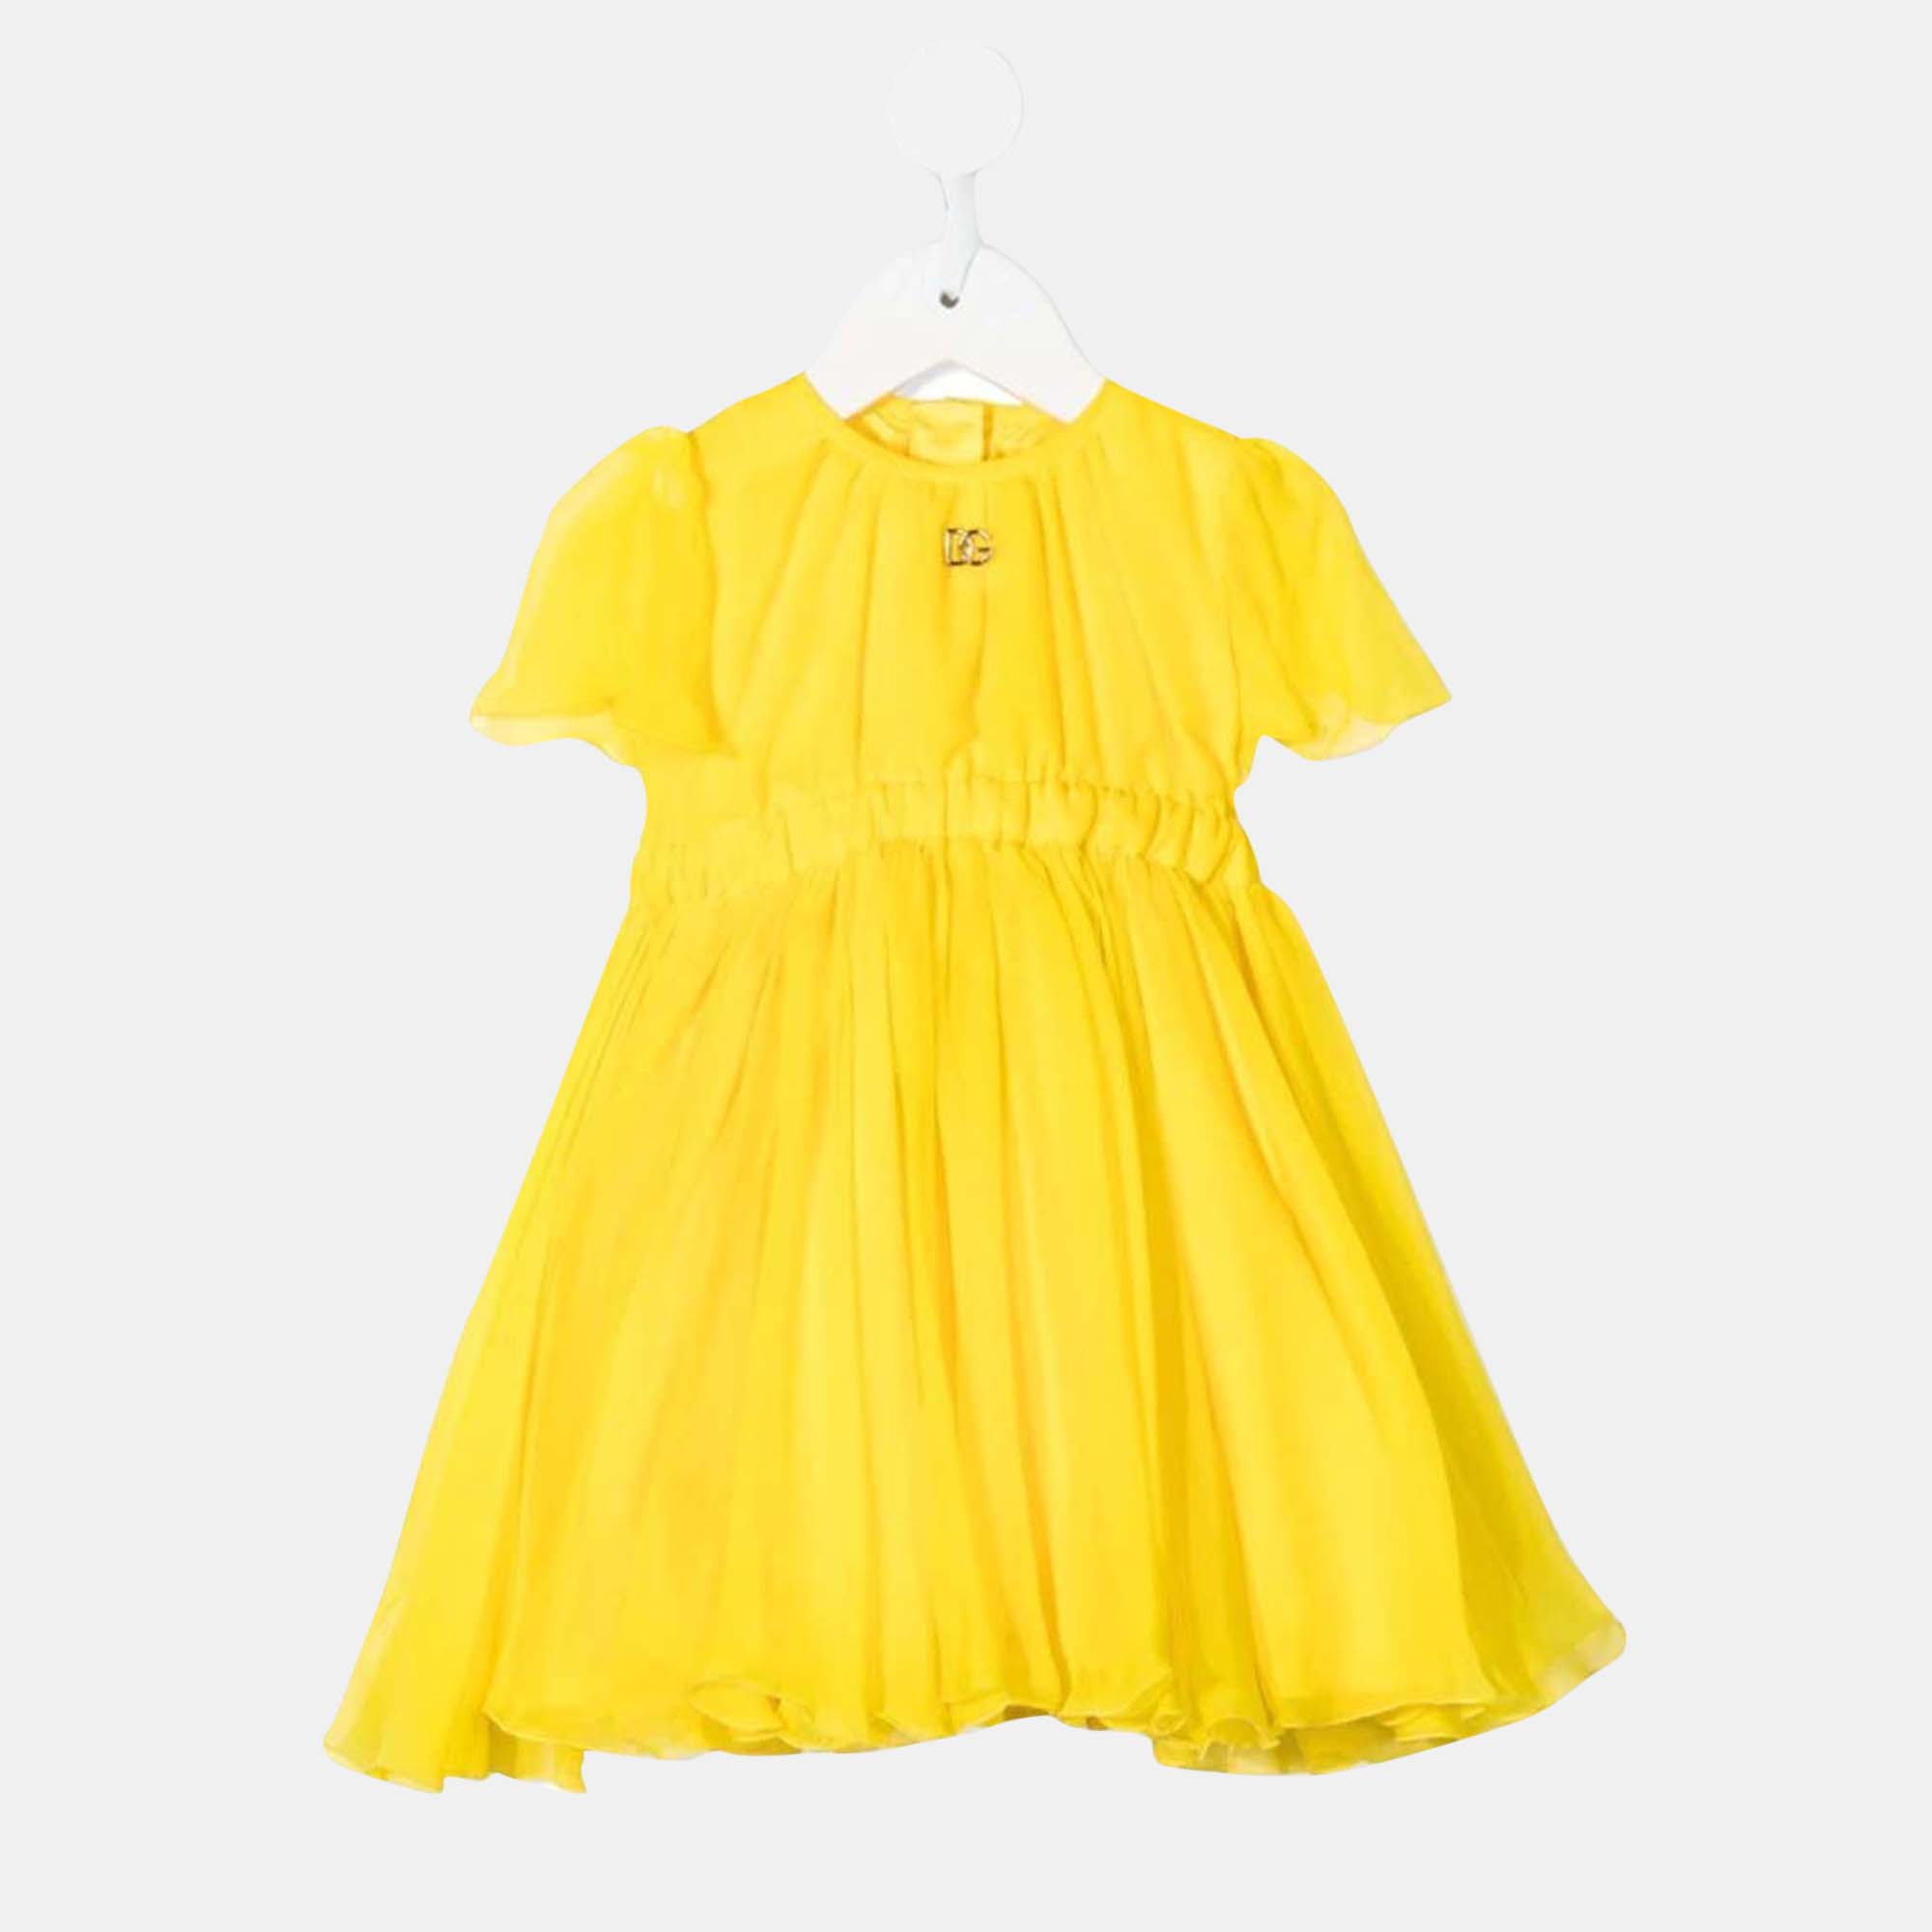 Dolce & gabbana kids yellow - silk - logo joy therapy themed dress size 6/9